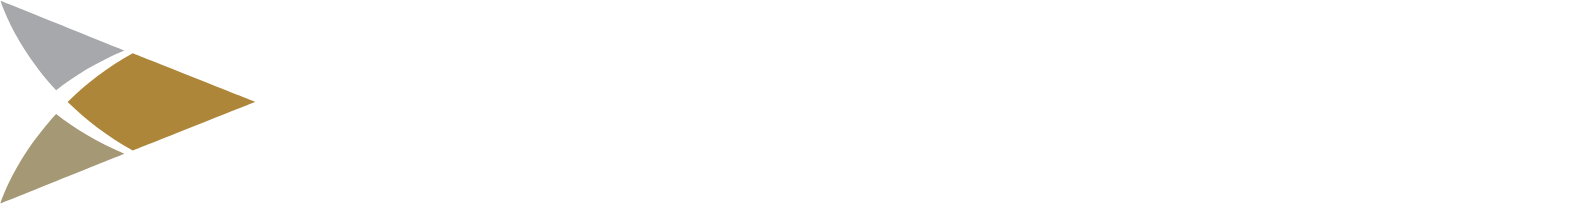 Bank of New York Mellon logo grand pour les fonds sombres (PNG transparent)